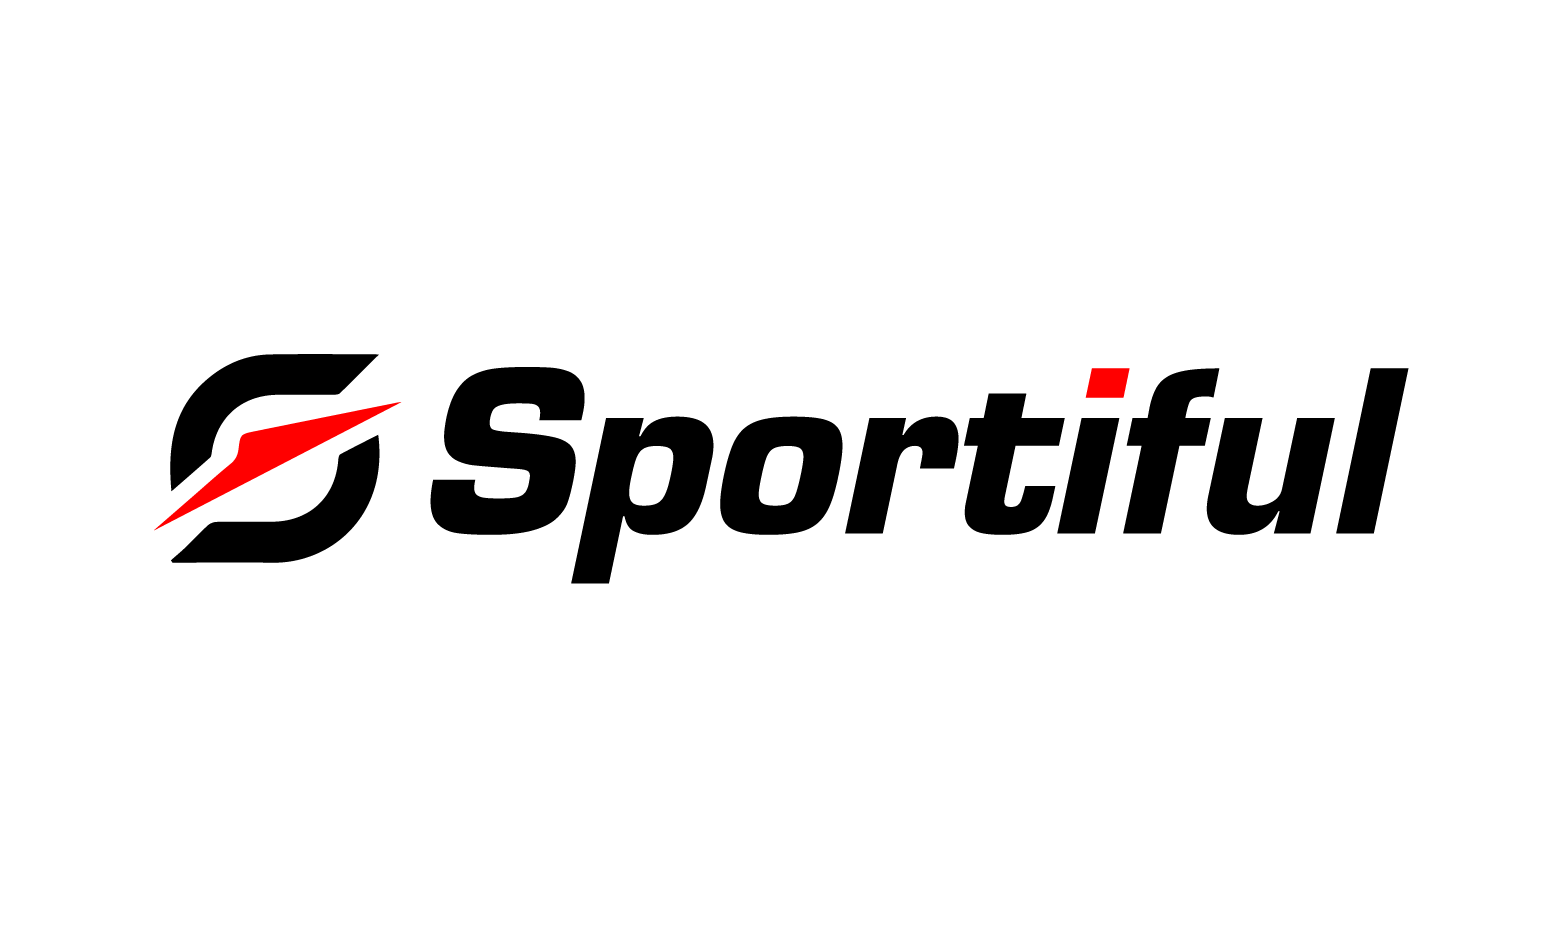 Sportiful.com - Creative brandable domain for sale